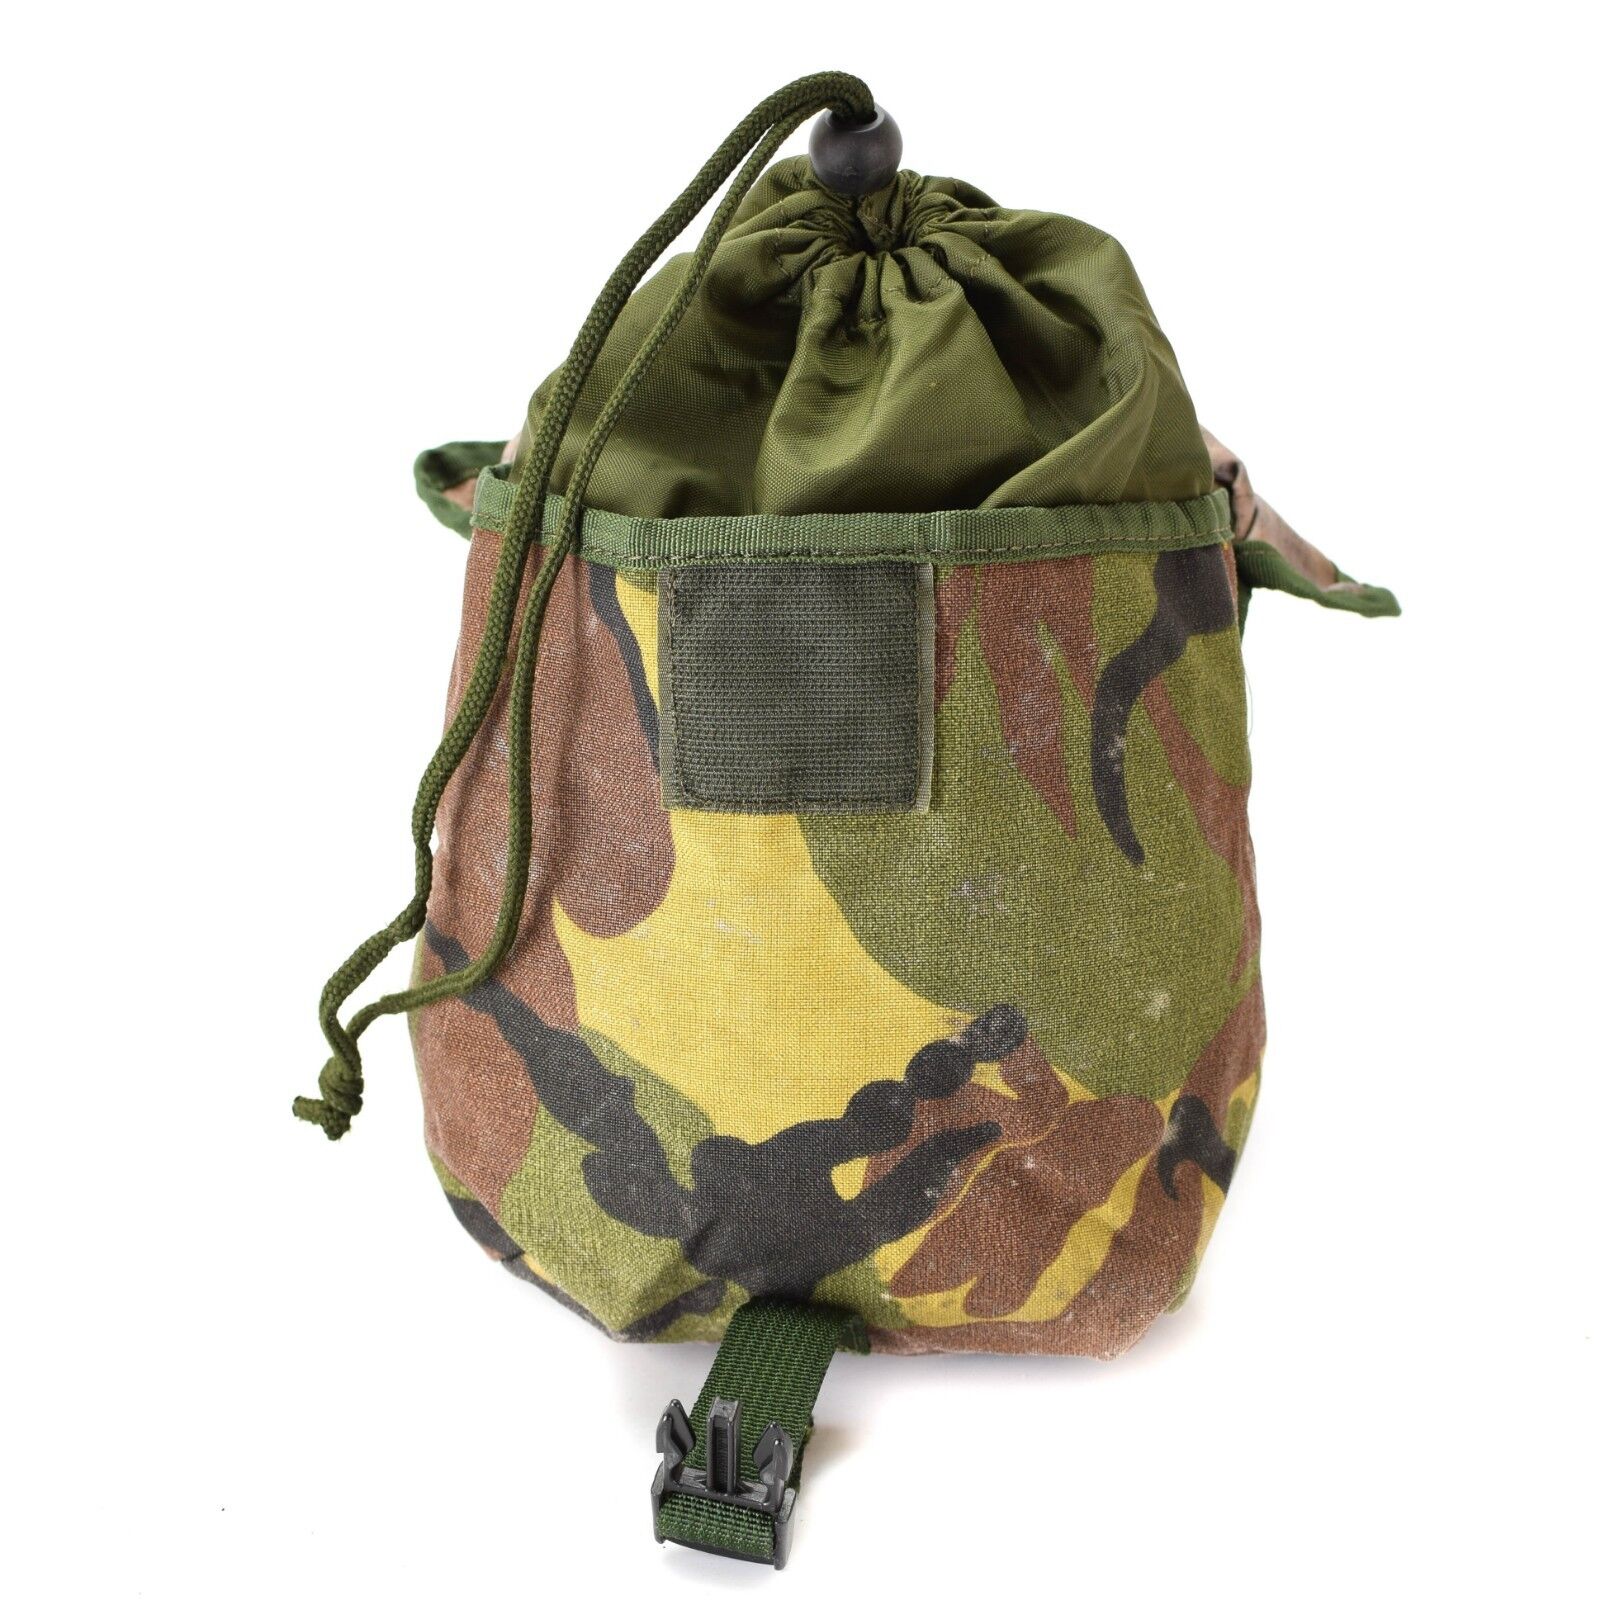 Original Dutch army utility pouch modular Molle carrying bag military Medium DPM